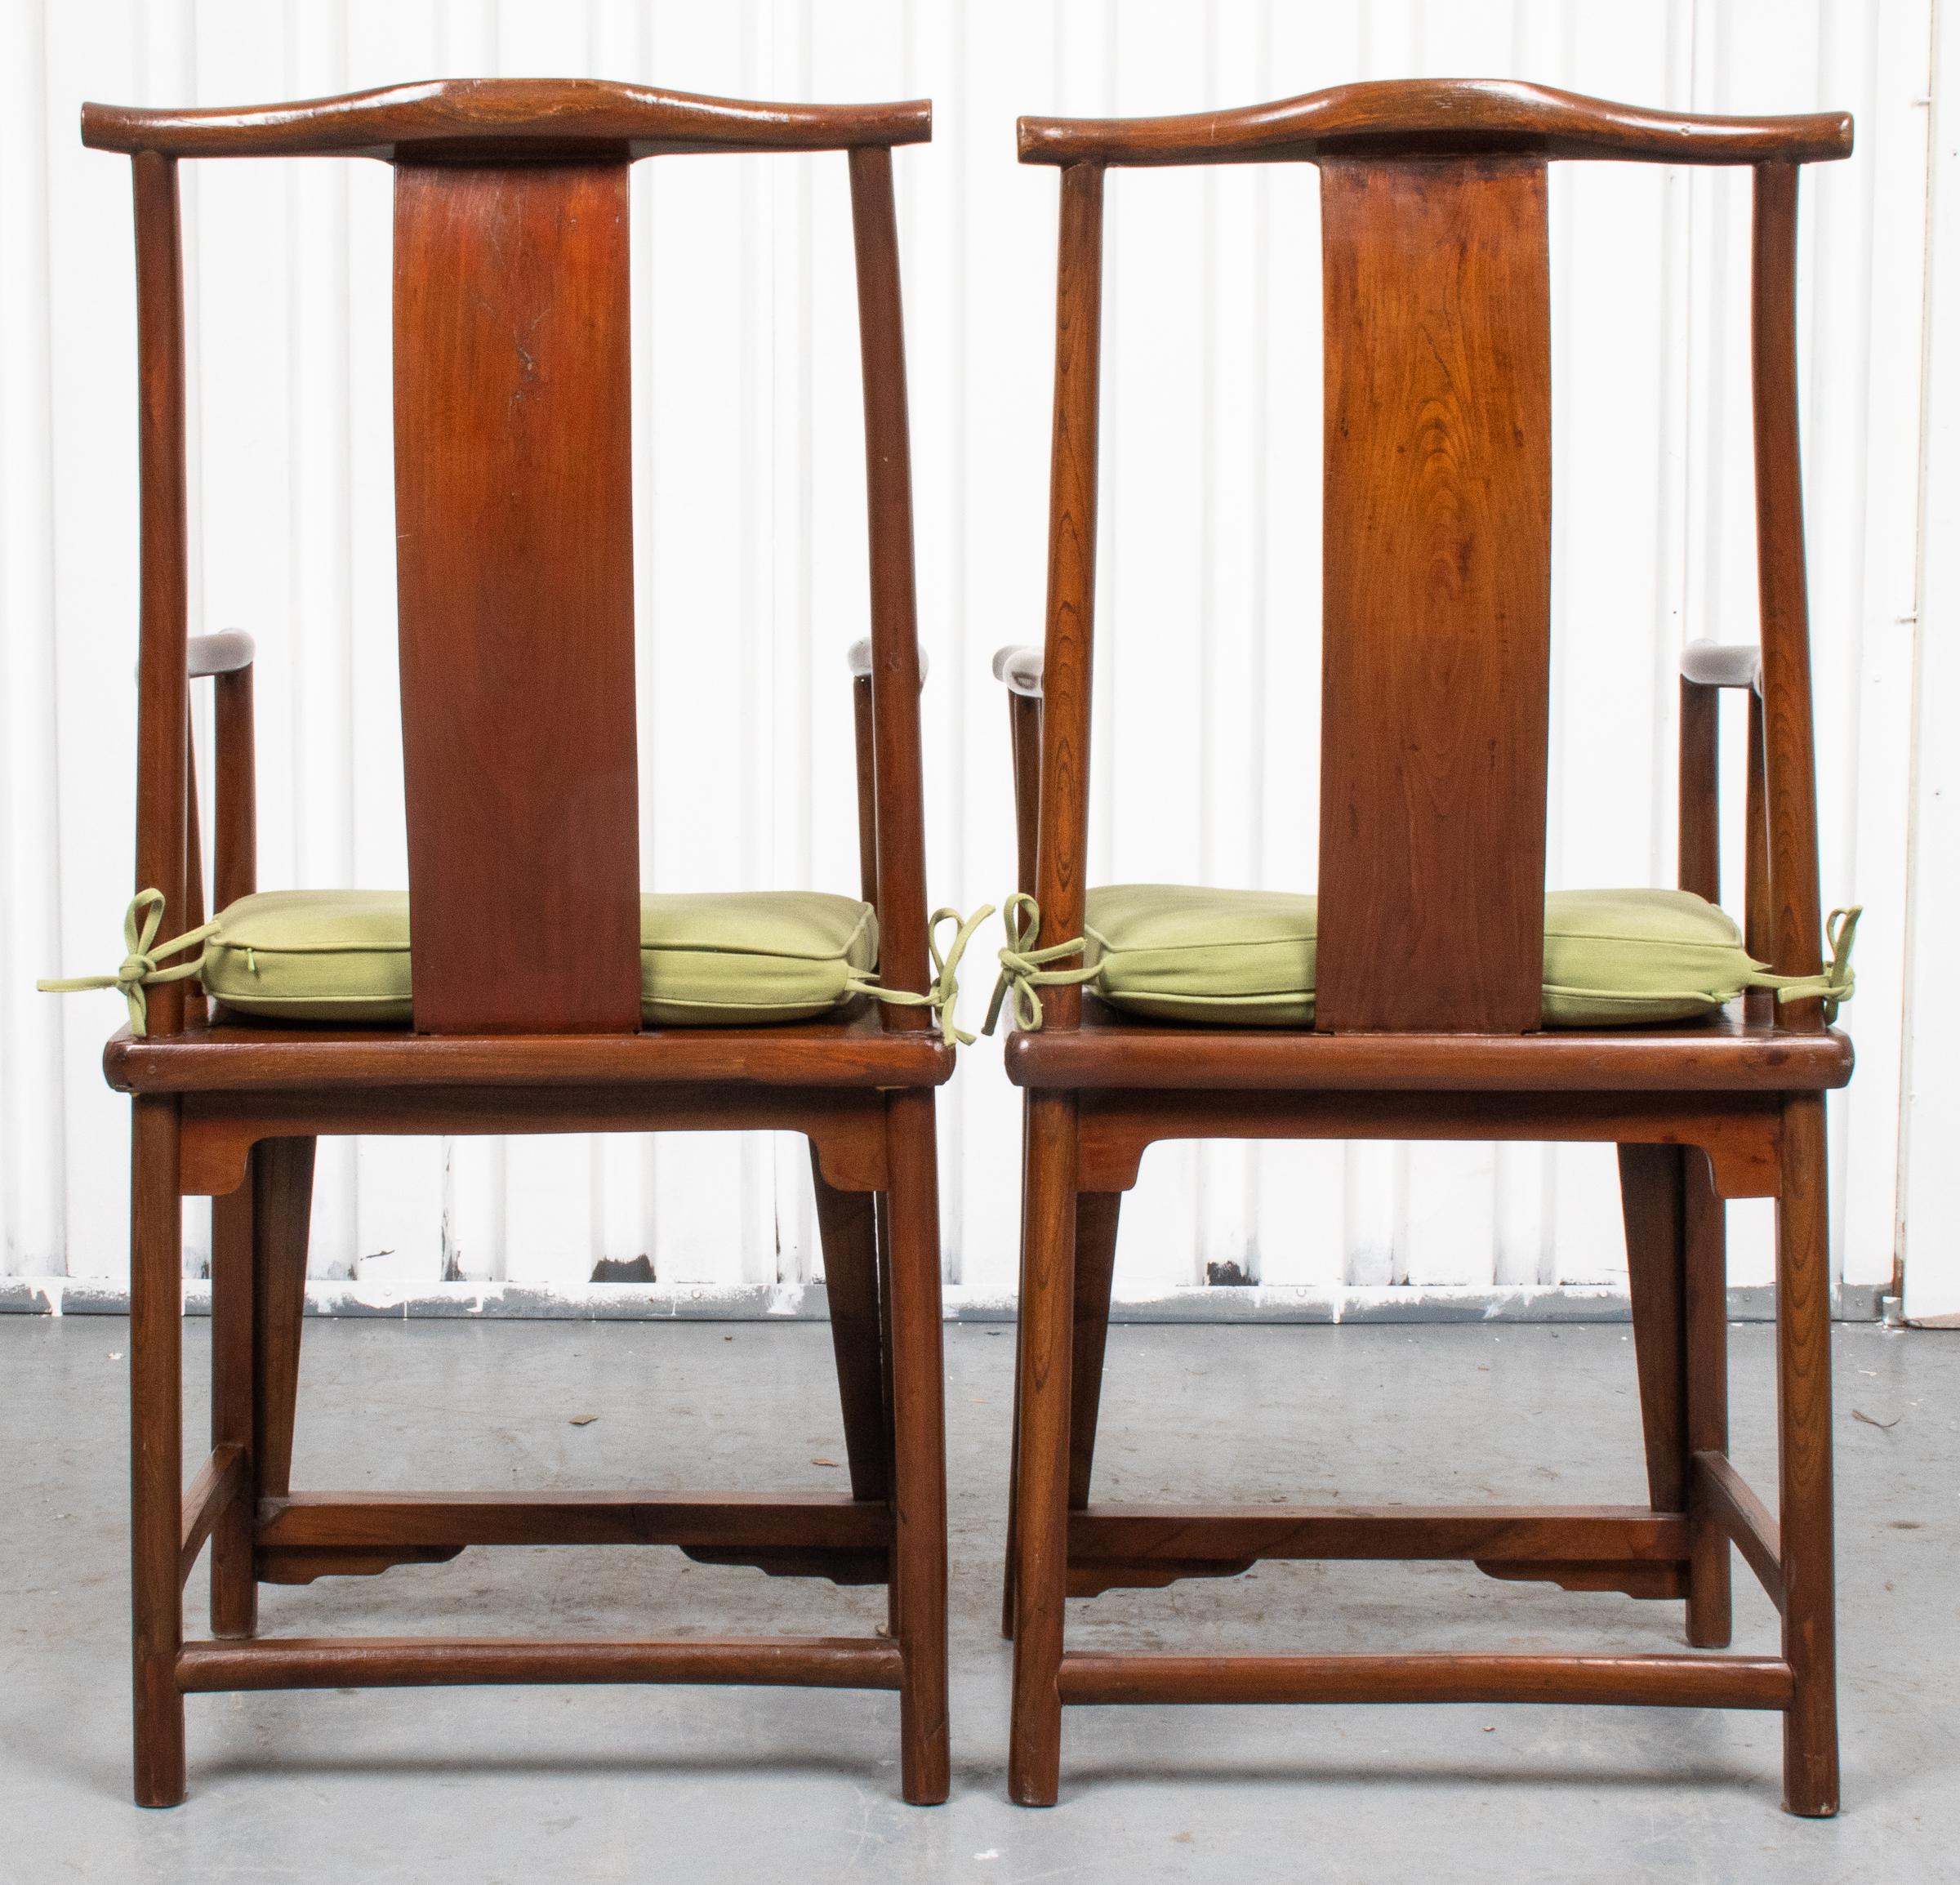 20th Century Chinese Hardwood Yoke Back Scholar's Chairs